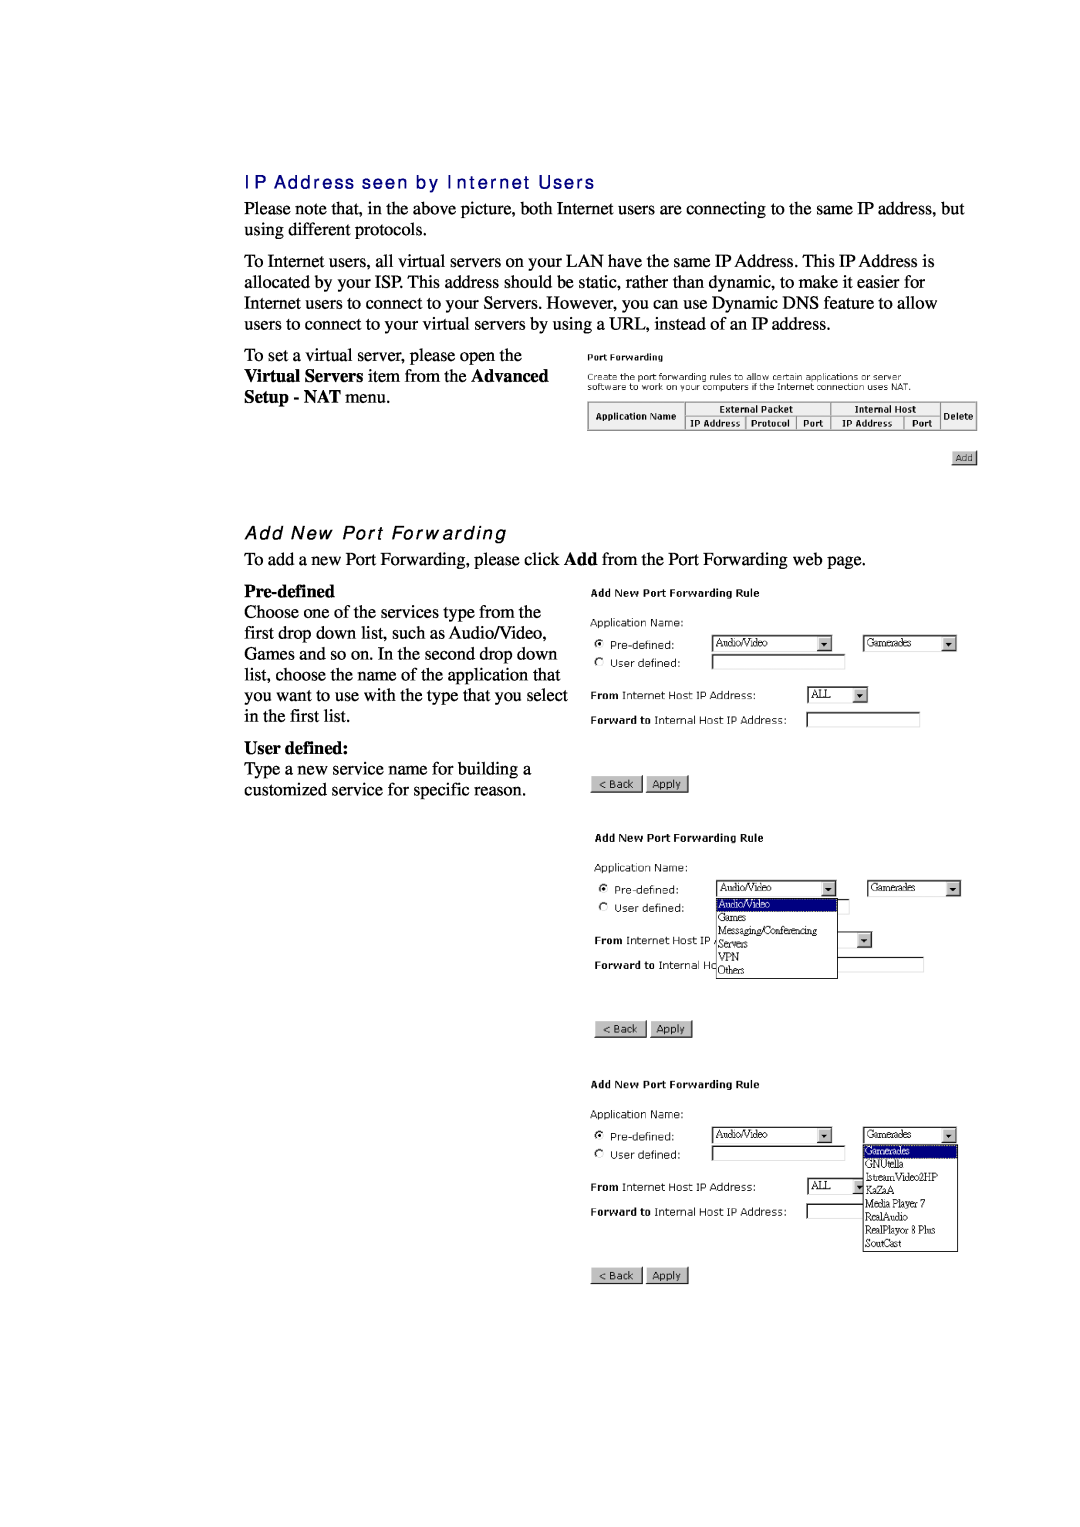 Siemens CL-010-I manual IP Address seen by Internet Users, Add New Port Forwarding, Pre-defined, User defined 